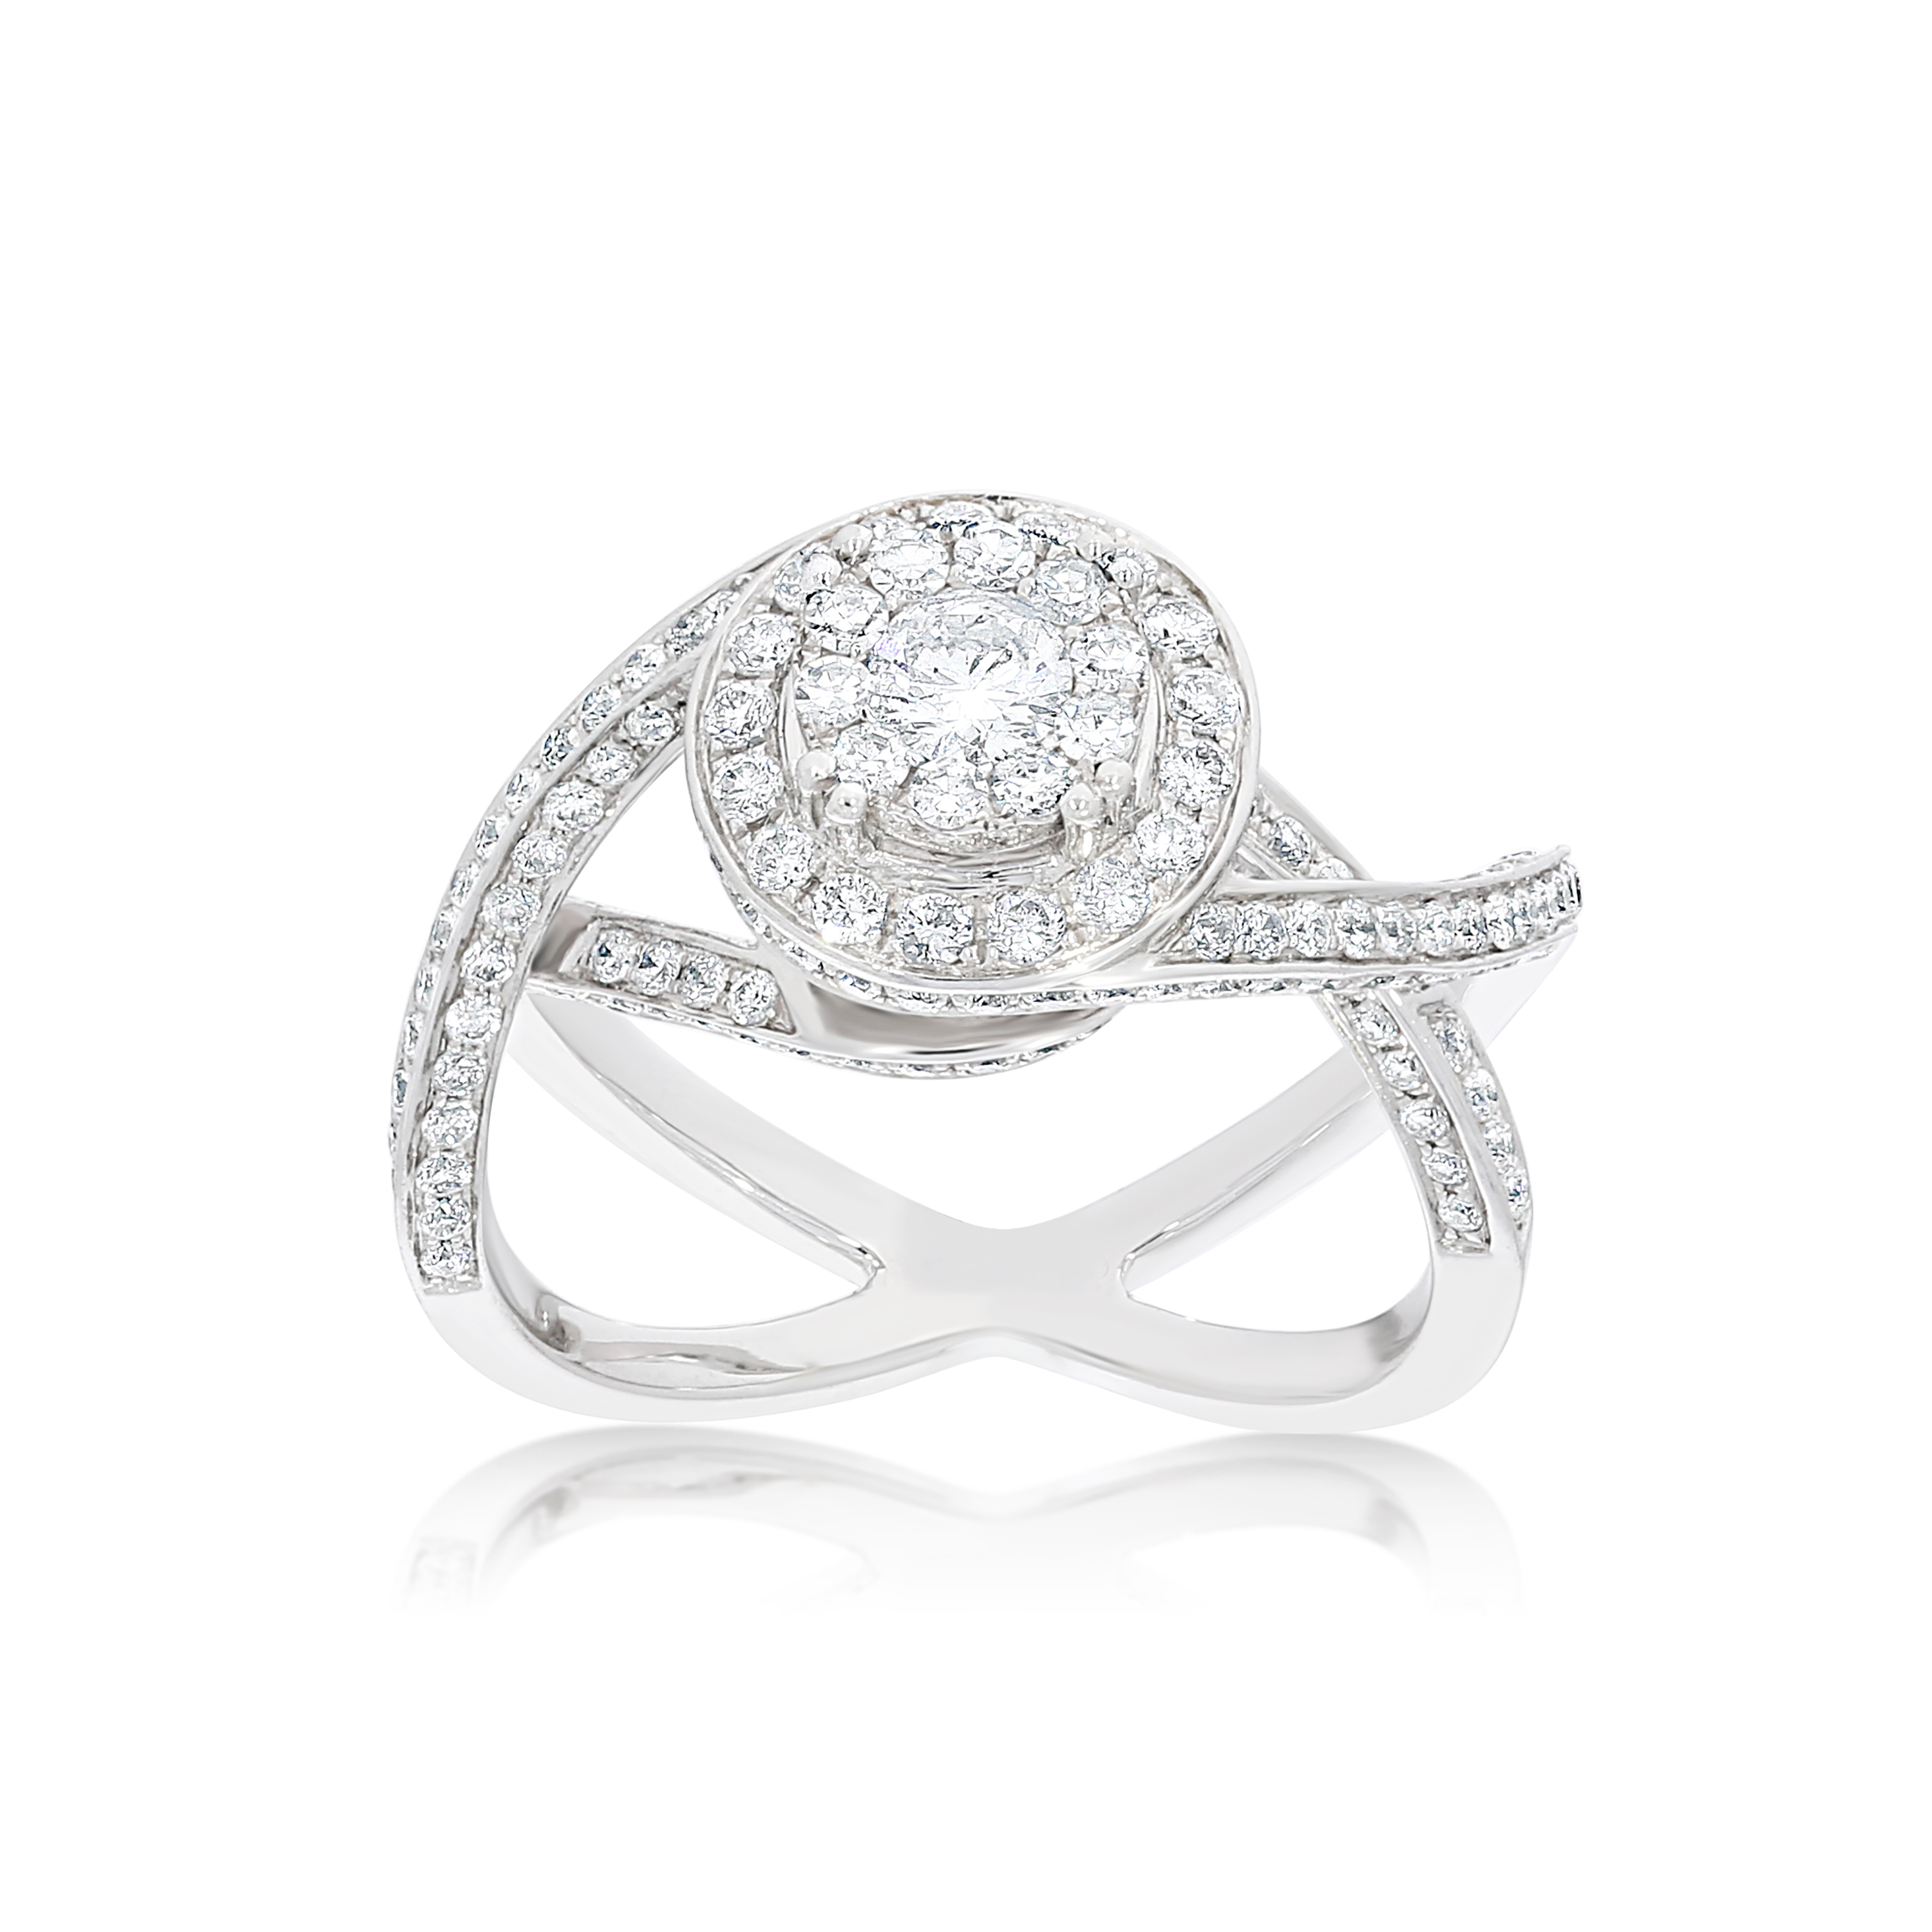 Diamond Engagement Ring Fancy Crossing 1.40 ct. 14k White Gold